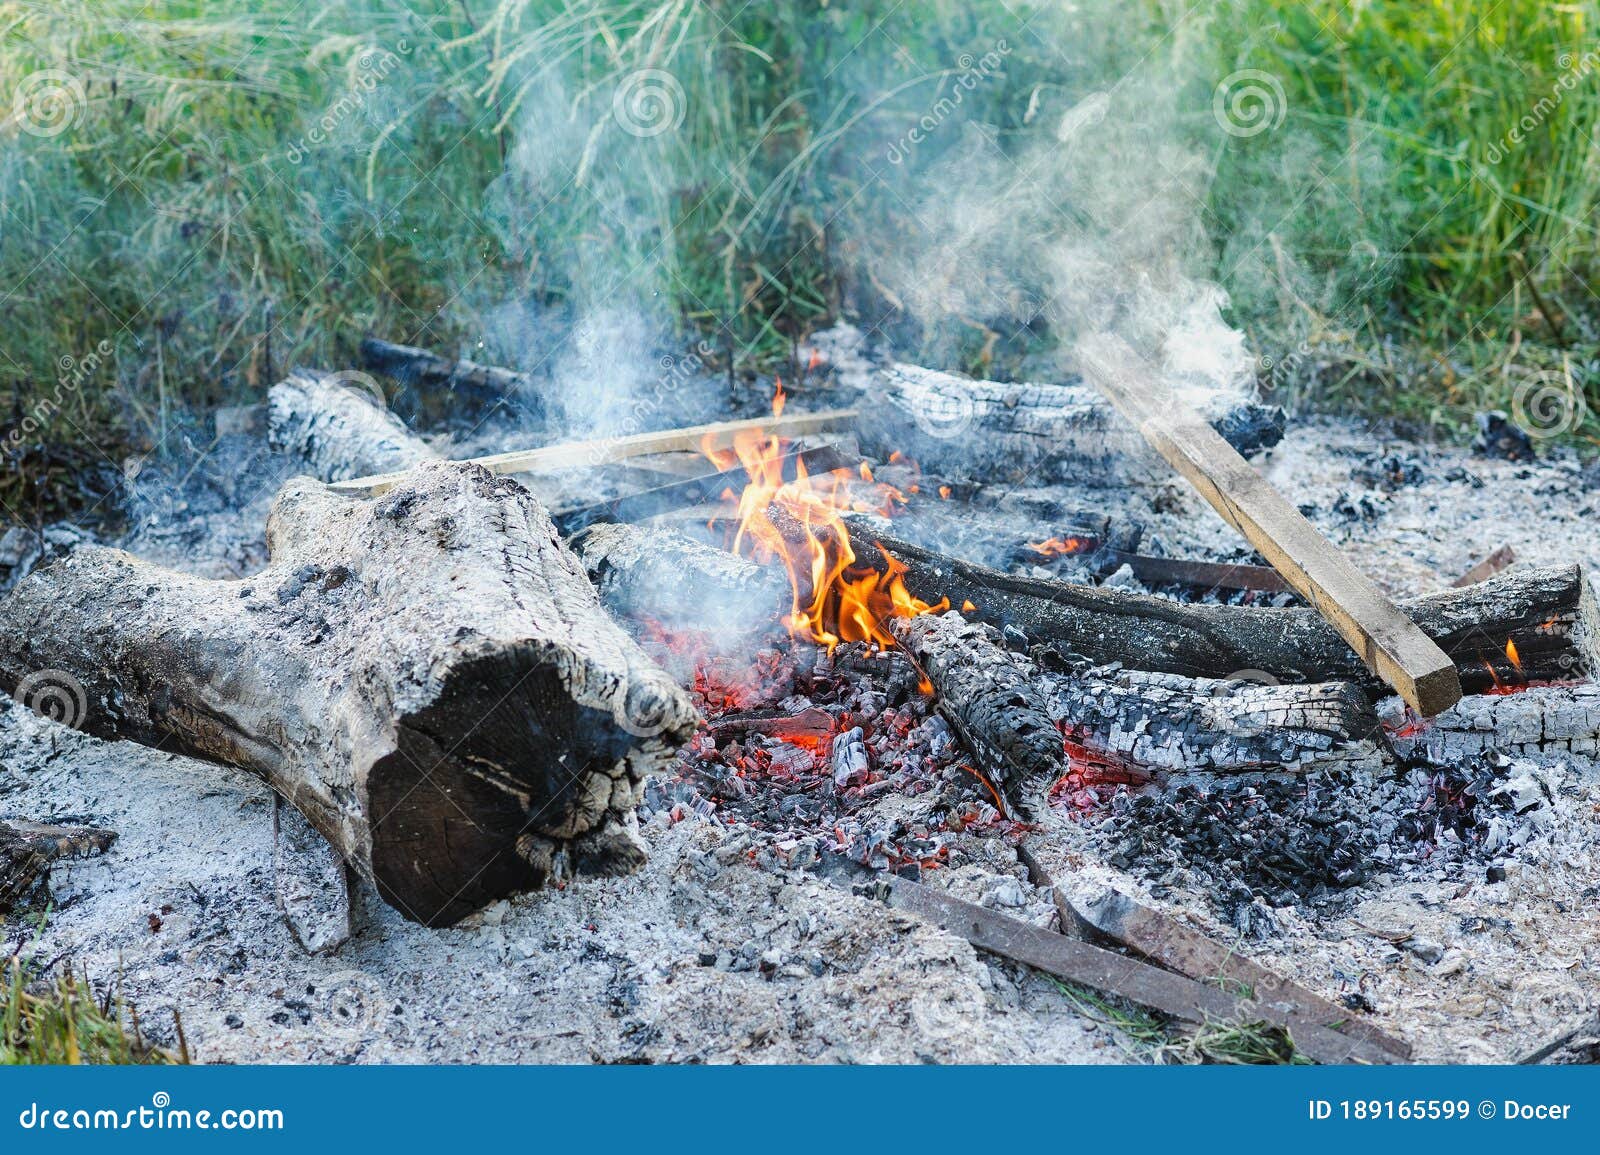 Burning Fire with Smoke on Nature Background Stock Image - Image of ...